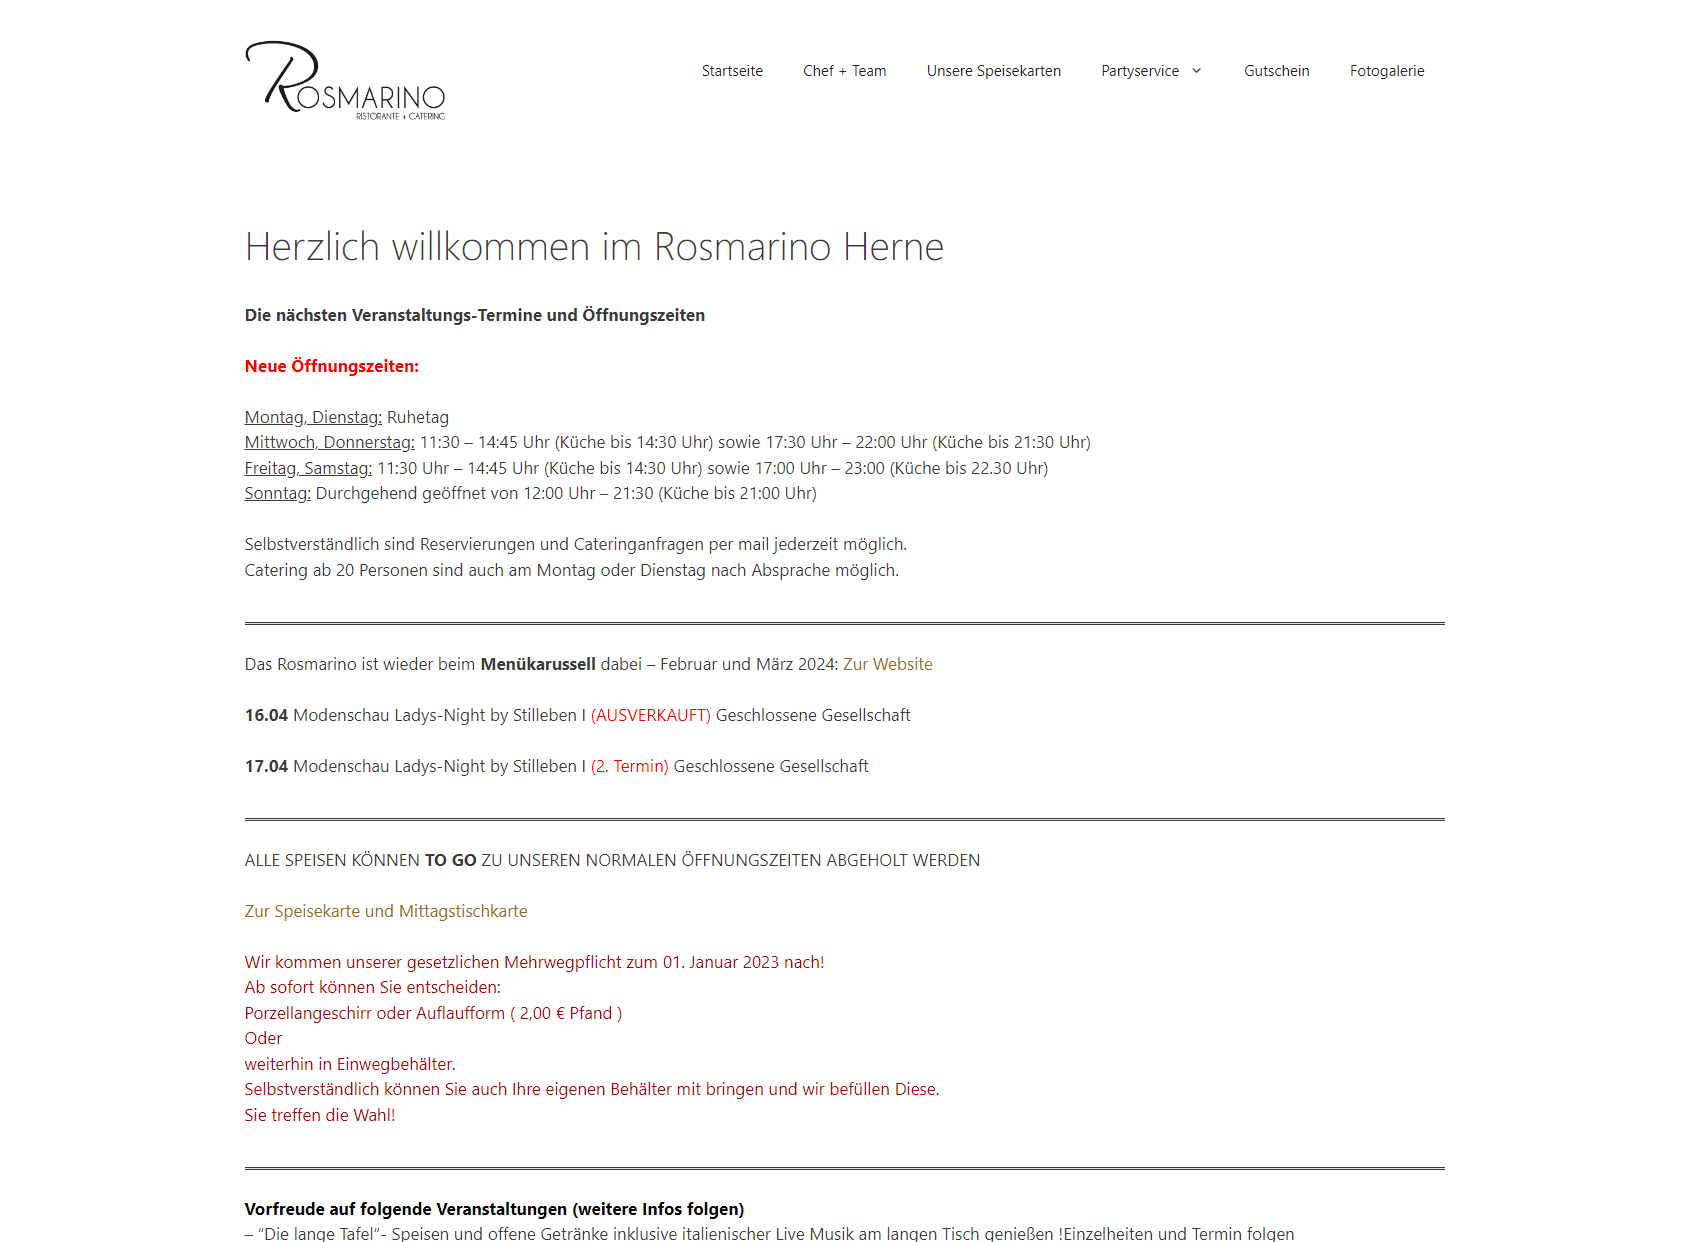 Rosmarino | Ristorante & Catering